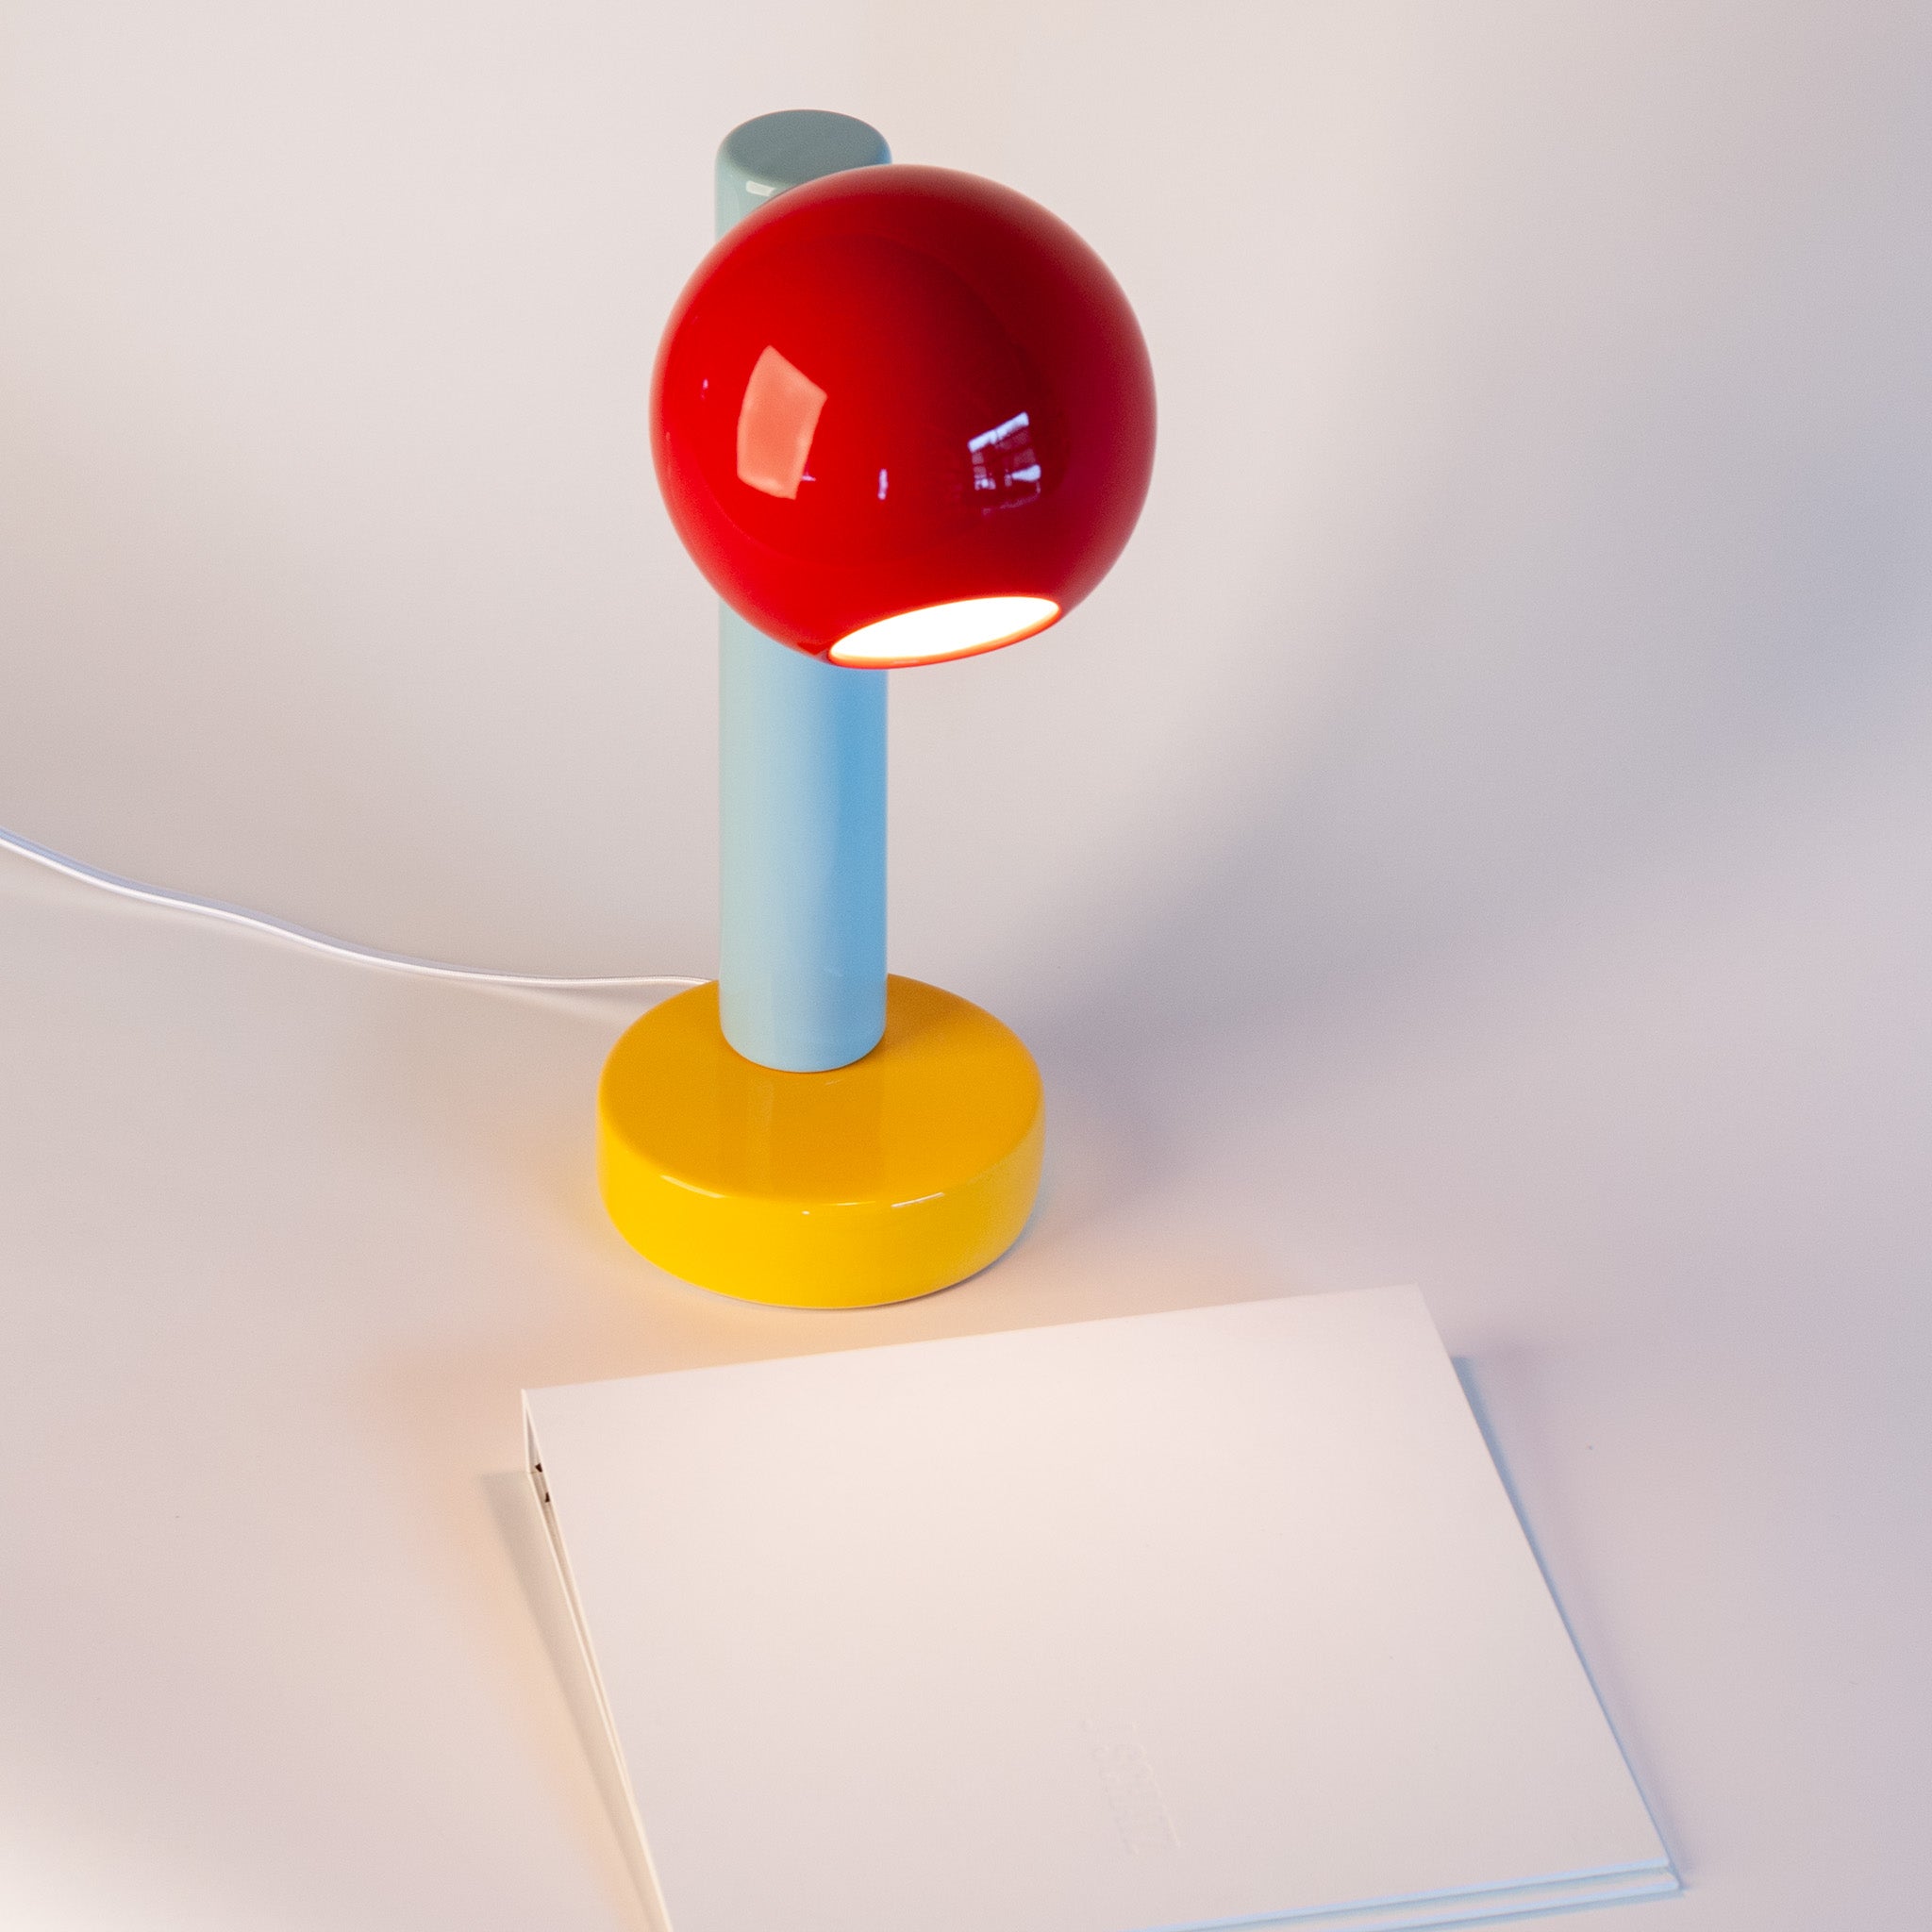 Spot On Desk Lamp in Sumac Red, Light Aqua, Goldenrod Yellow